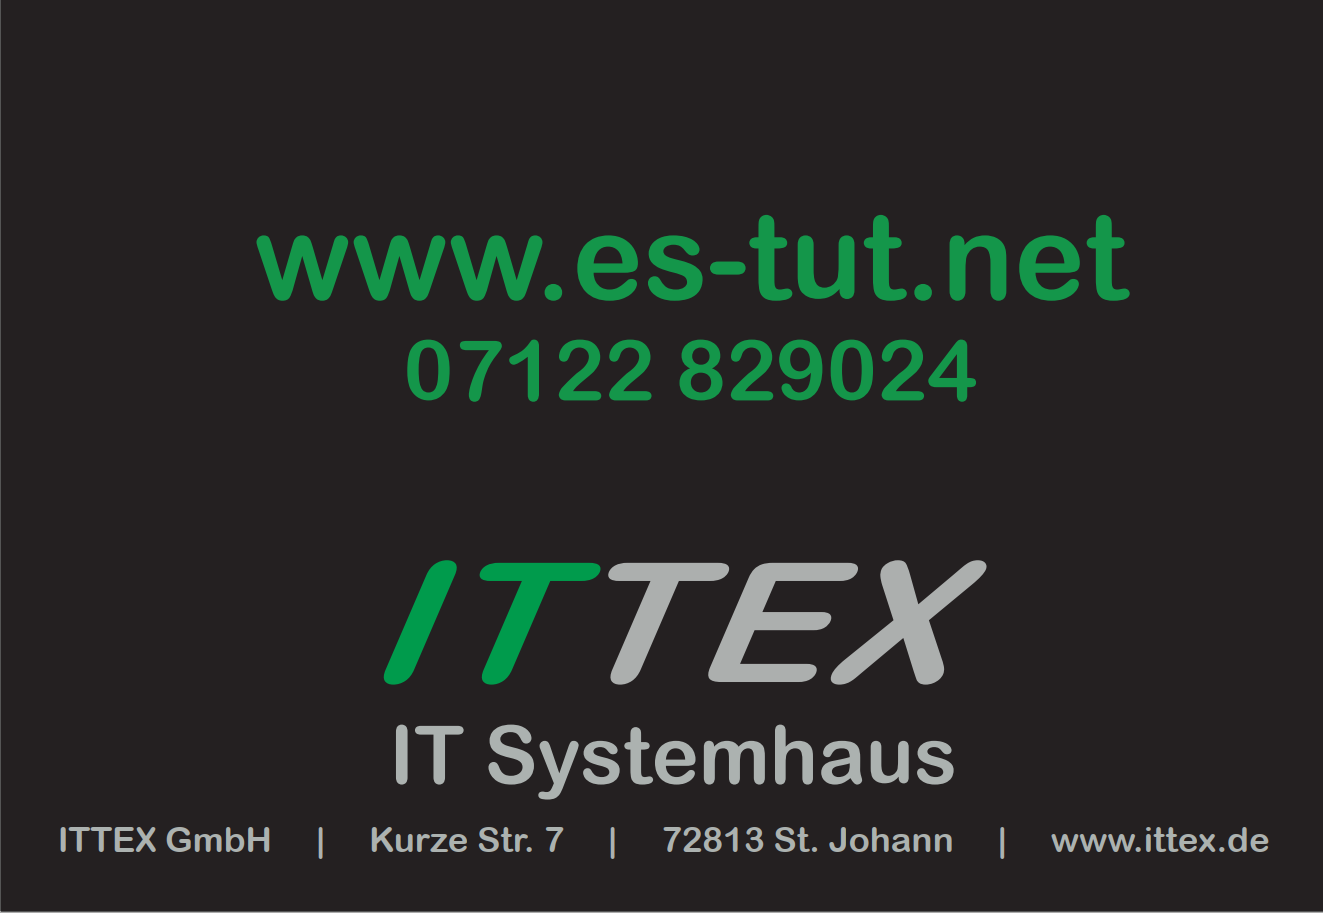 ITTEX GmbH